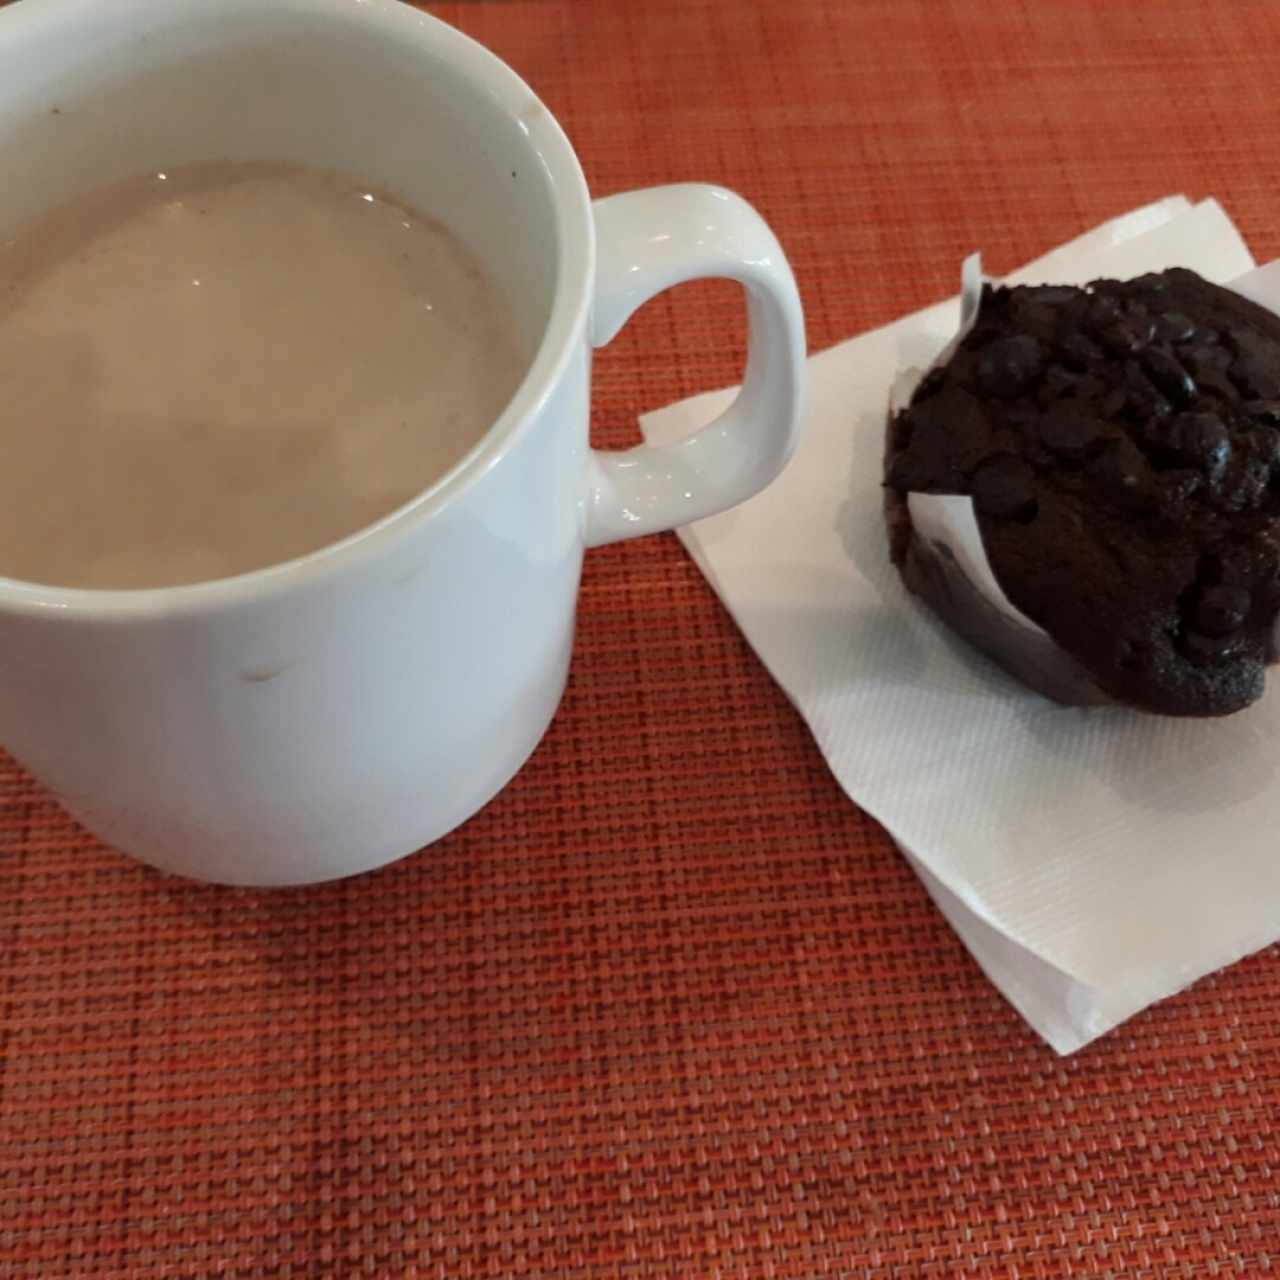 Chocolate caliente y muffin de chocolate